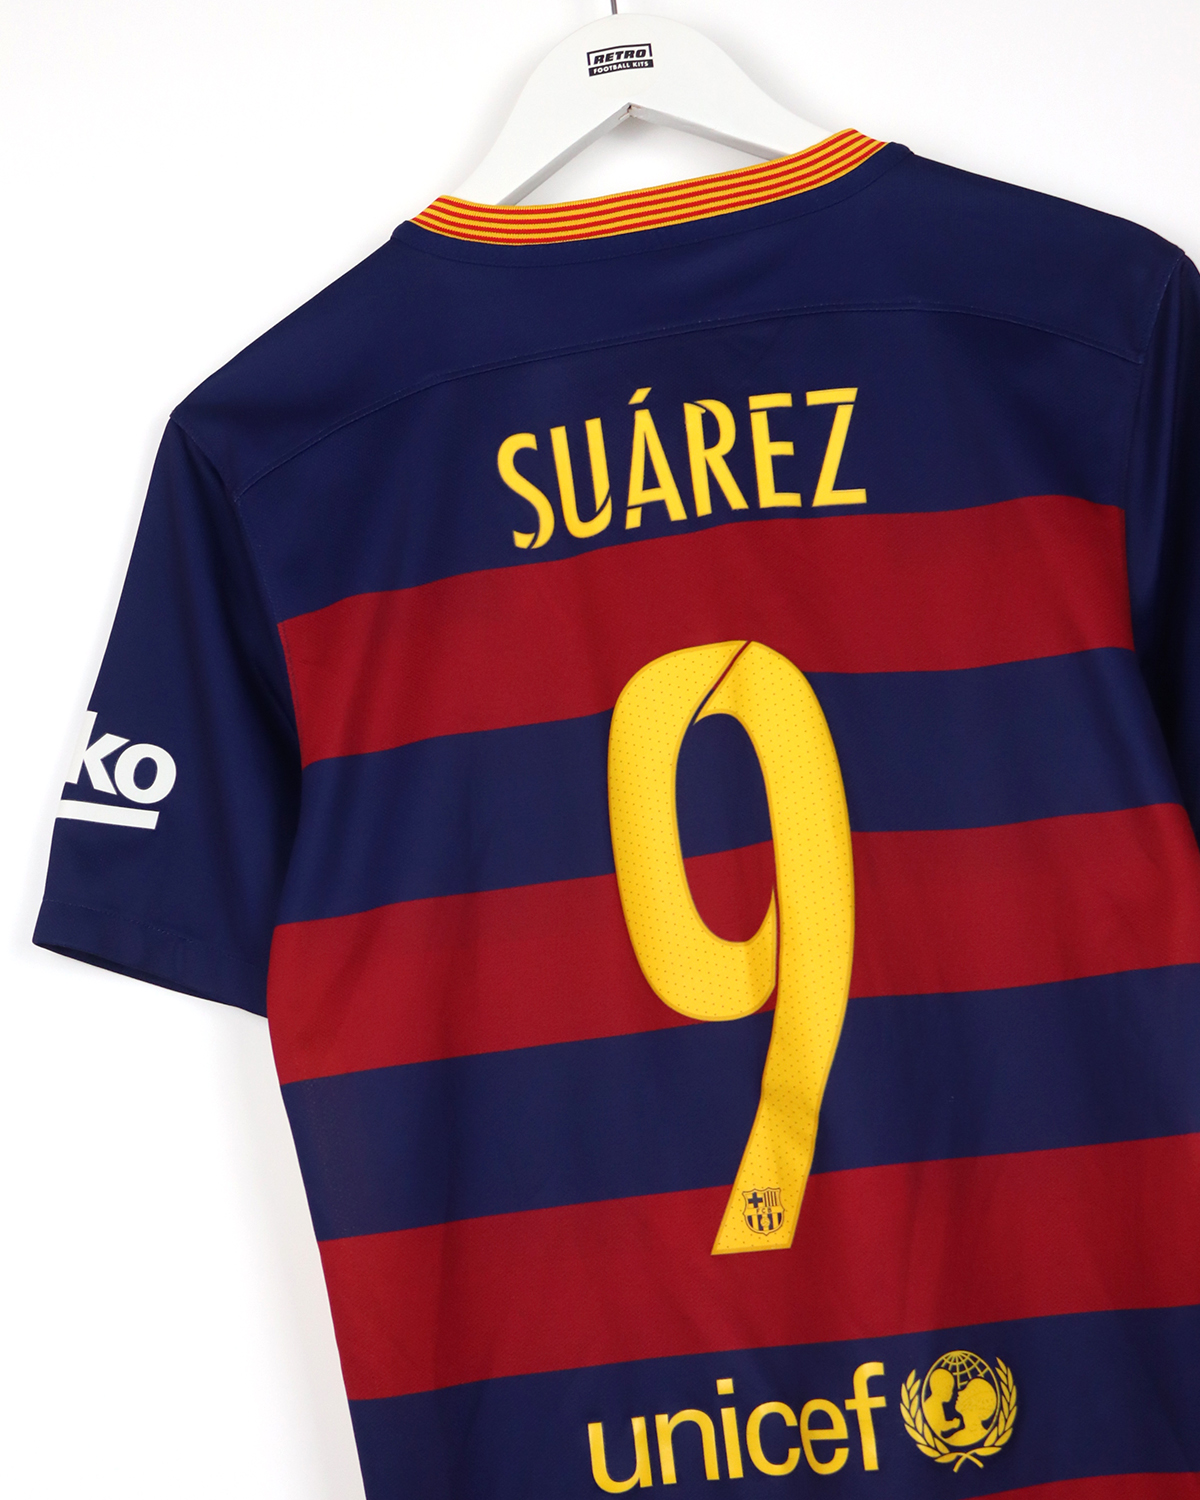 Happy Birthday Luis Suárez! 

Buy this kit here -   